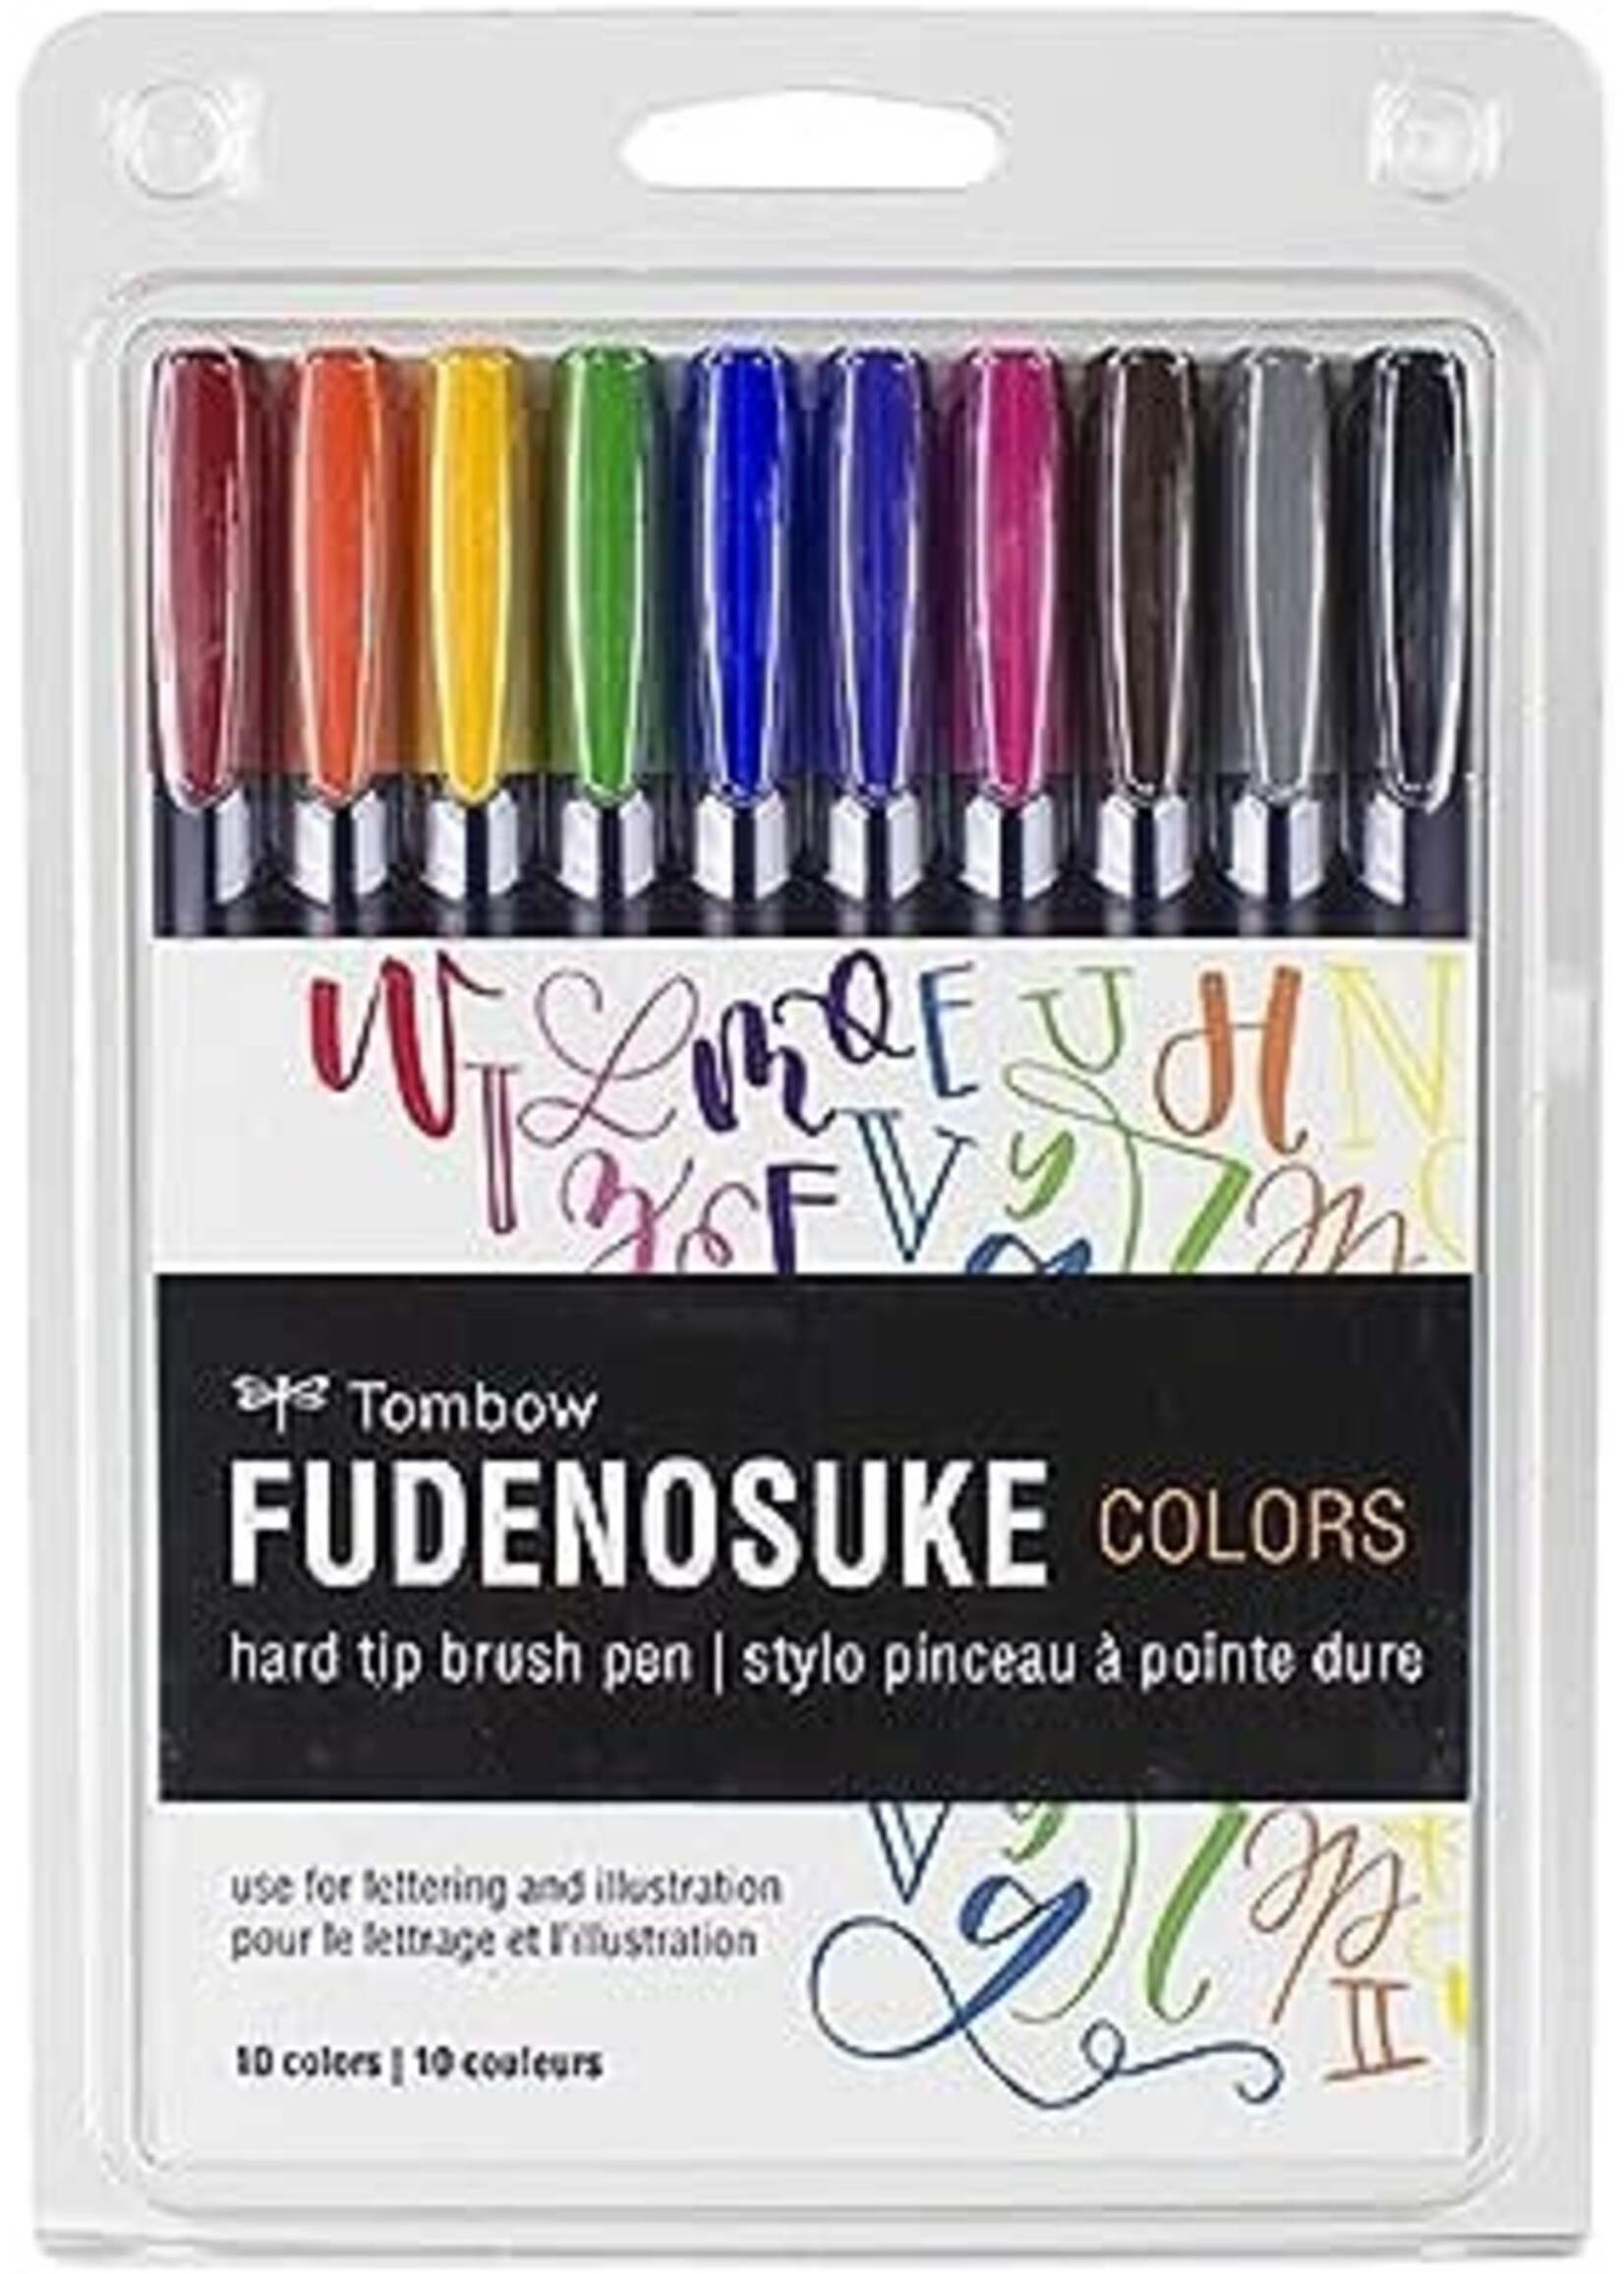 Fudenosuke Colors Pen Set